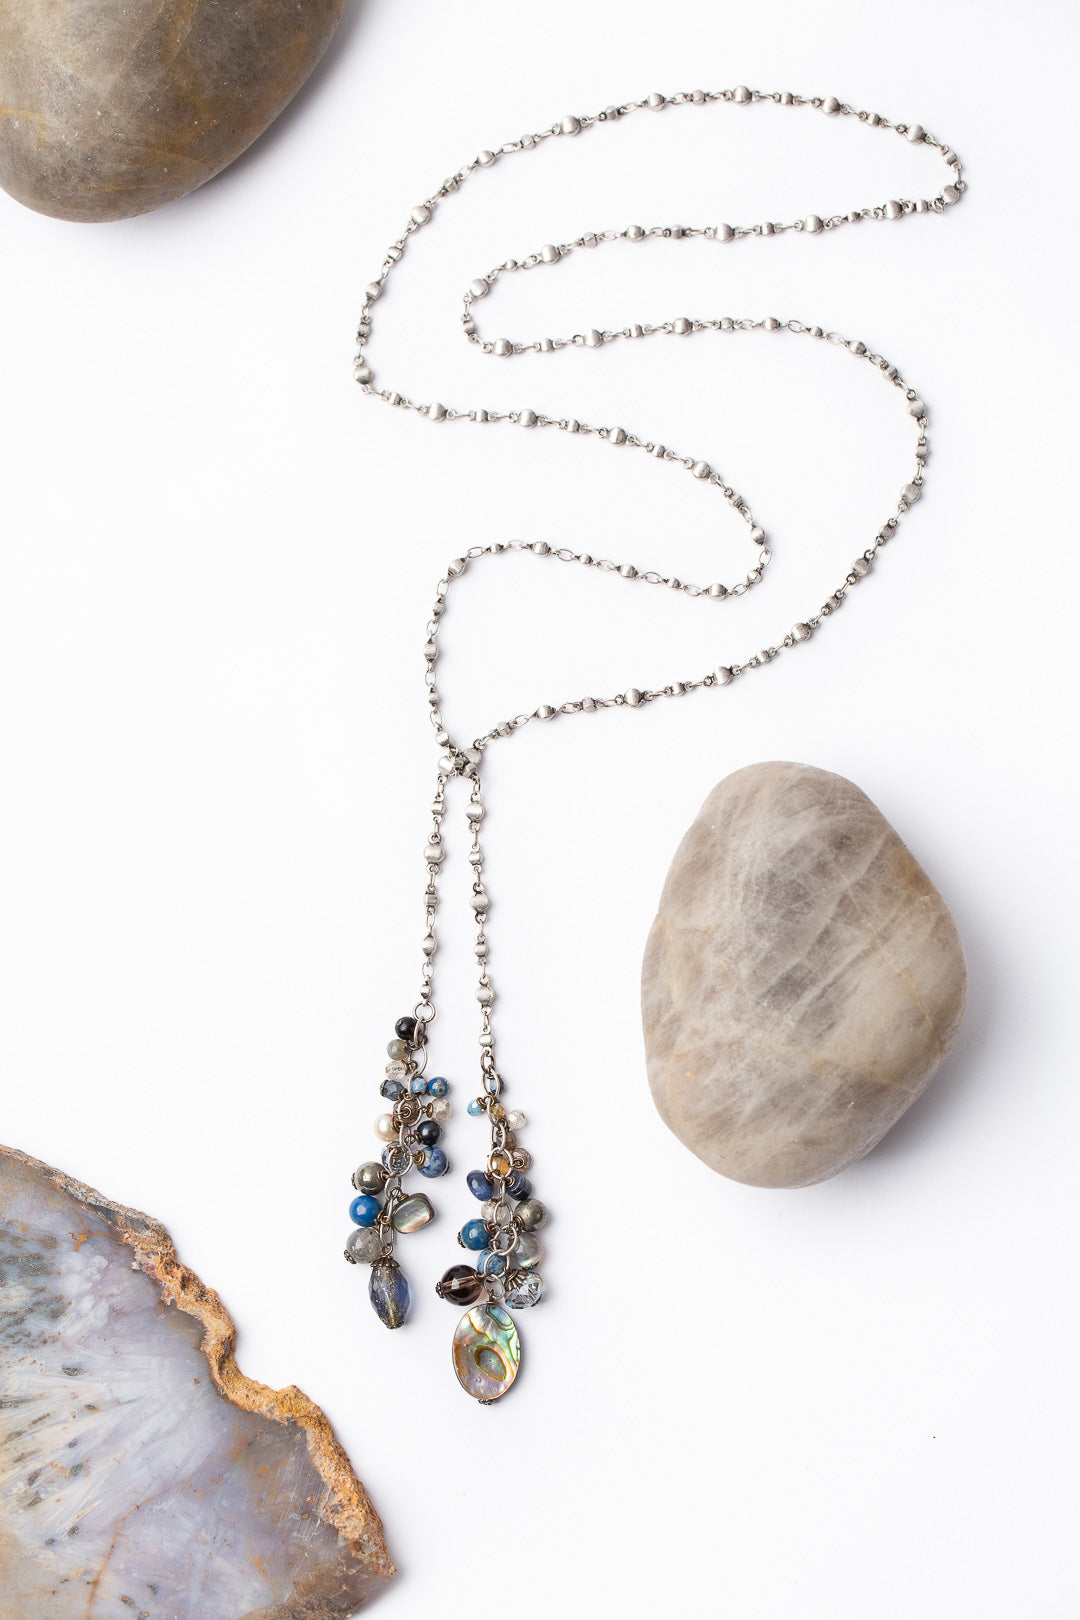 Claridad 32" Pyrite, Smoky Quartz, Czech Glass With Abalone Cluster Necklace